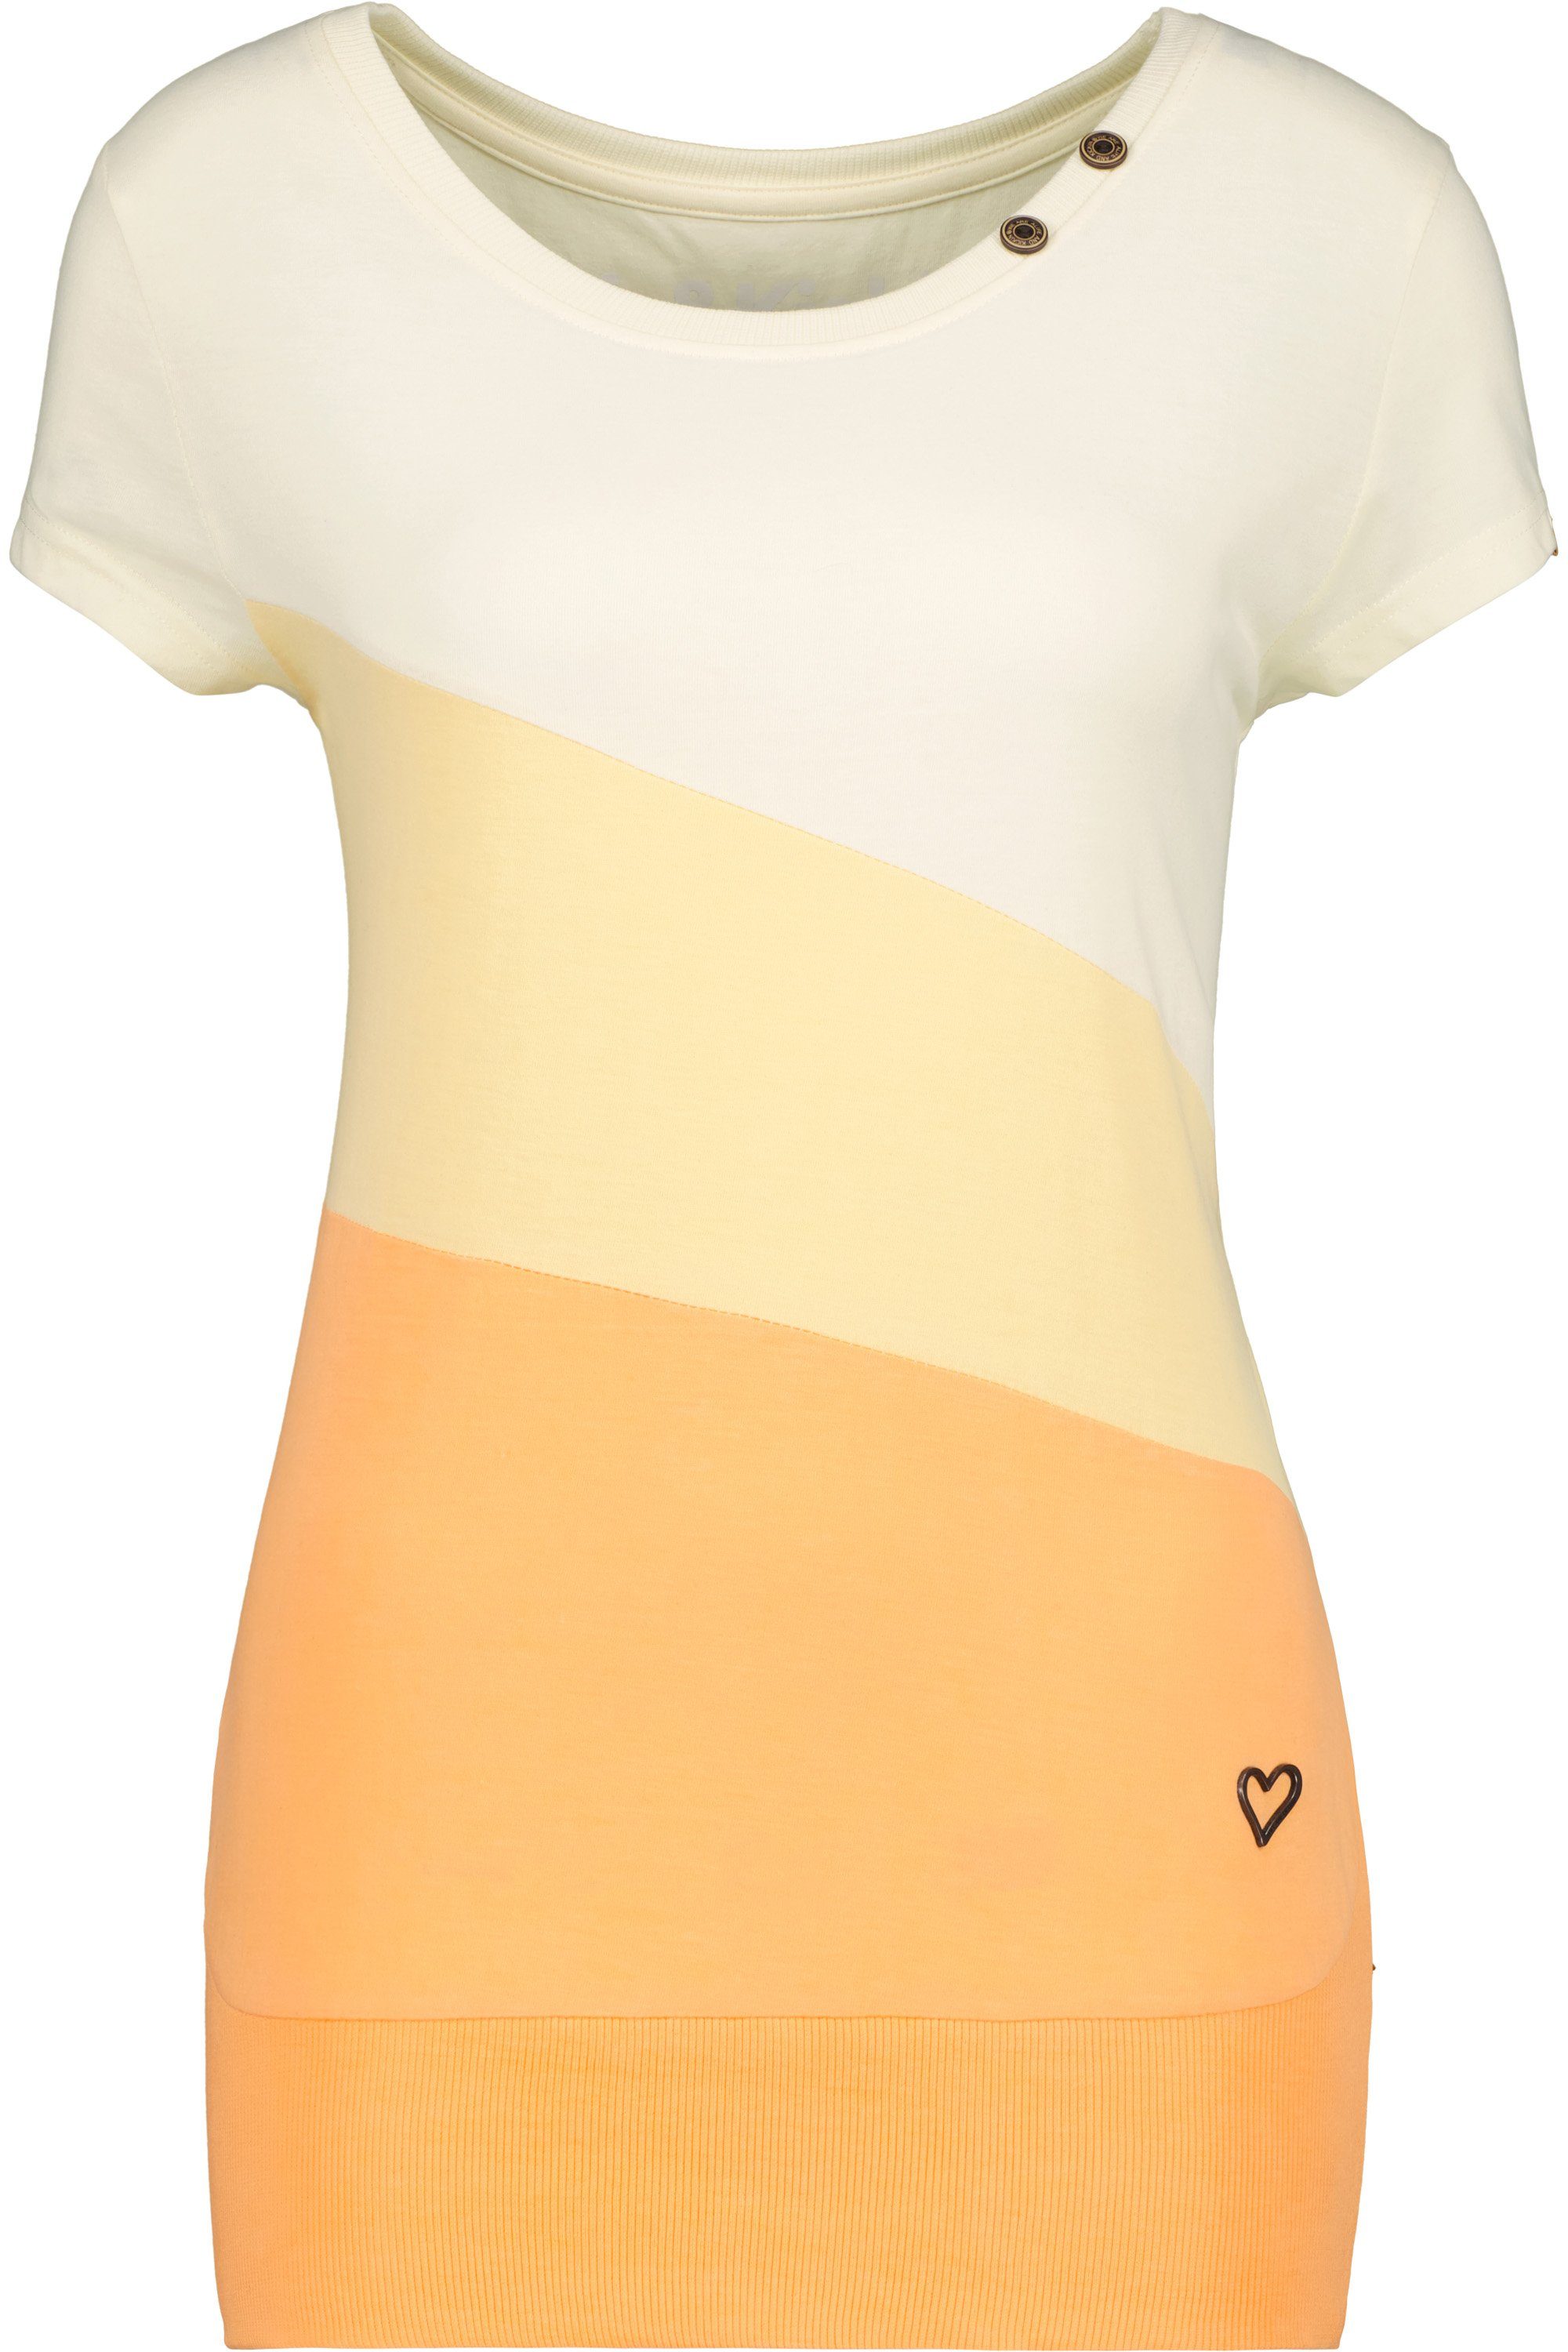 A Rundhalsshirt tangerine CordelieAK Kurzarmshirt, Alife Shirt & Damen Shirt Kickin melange